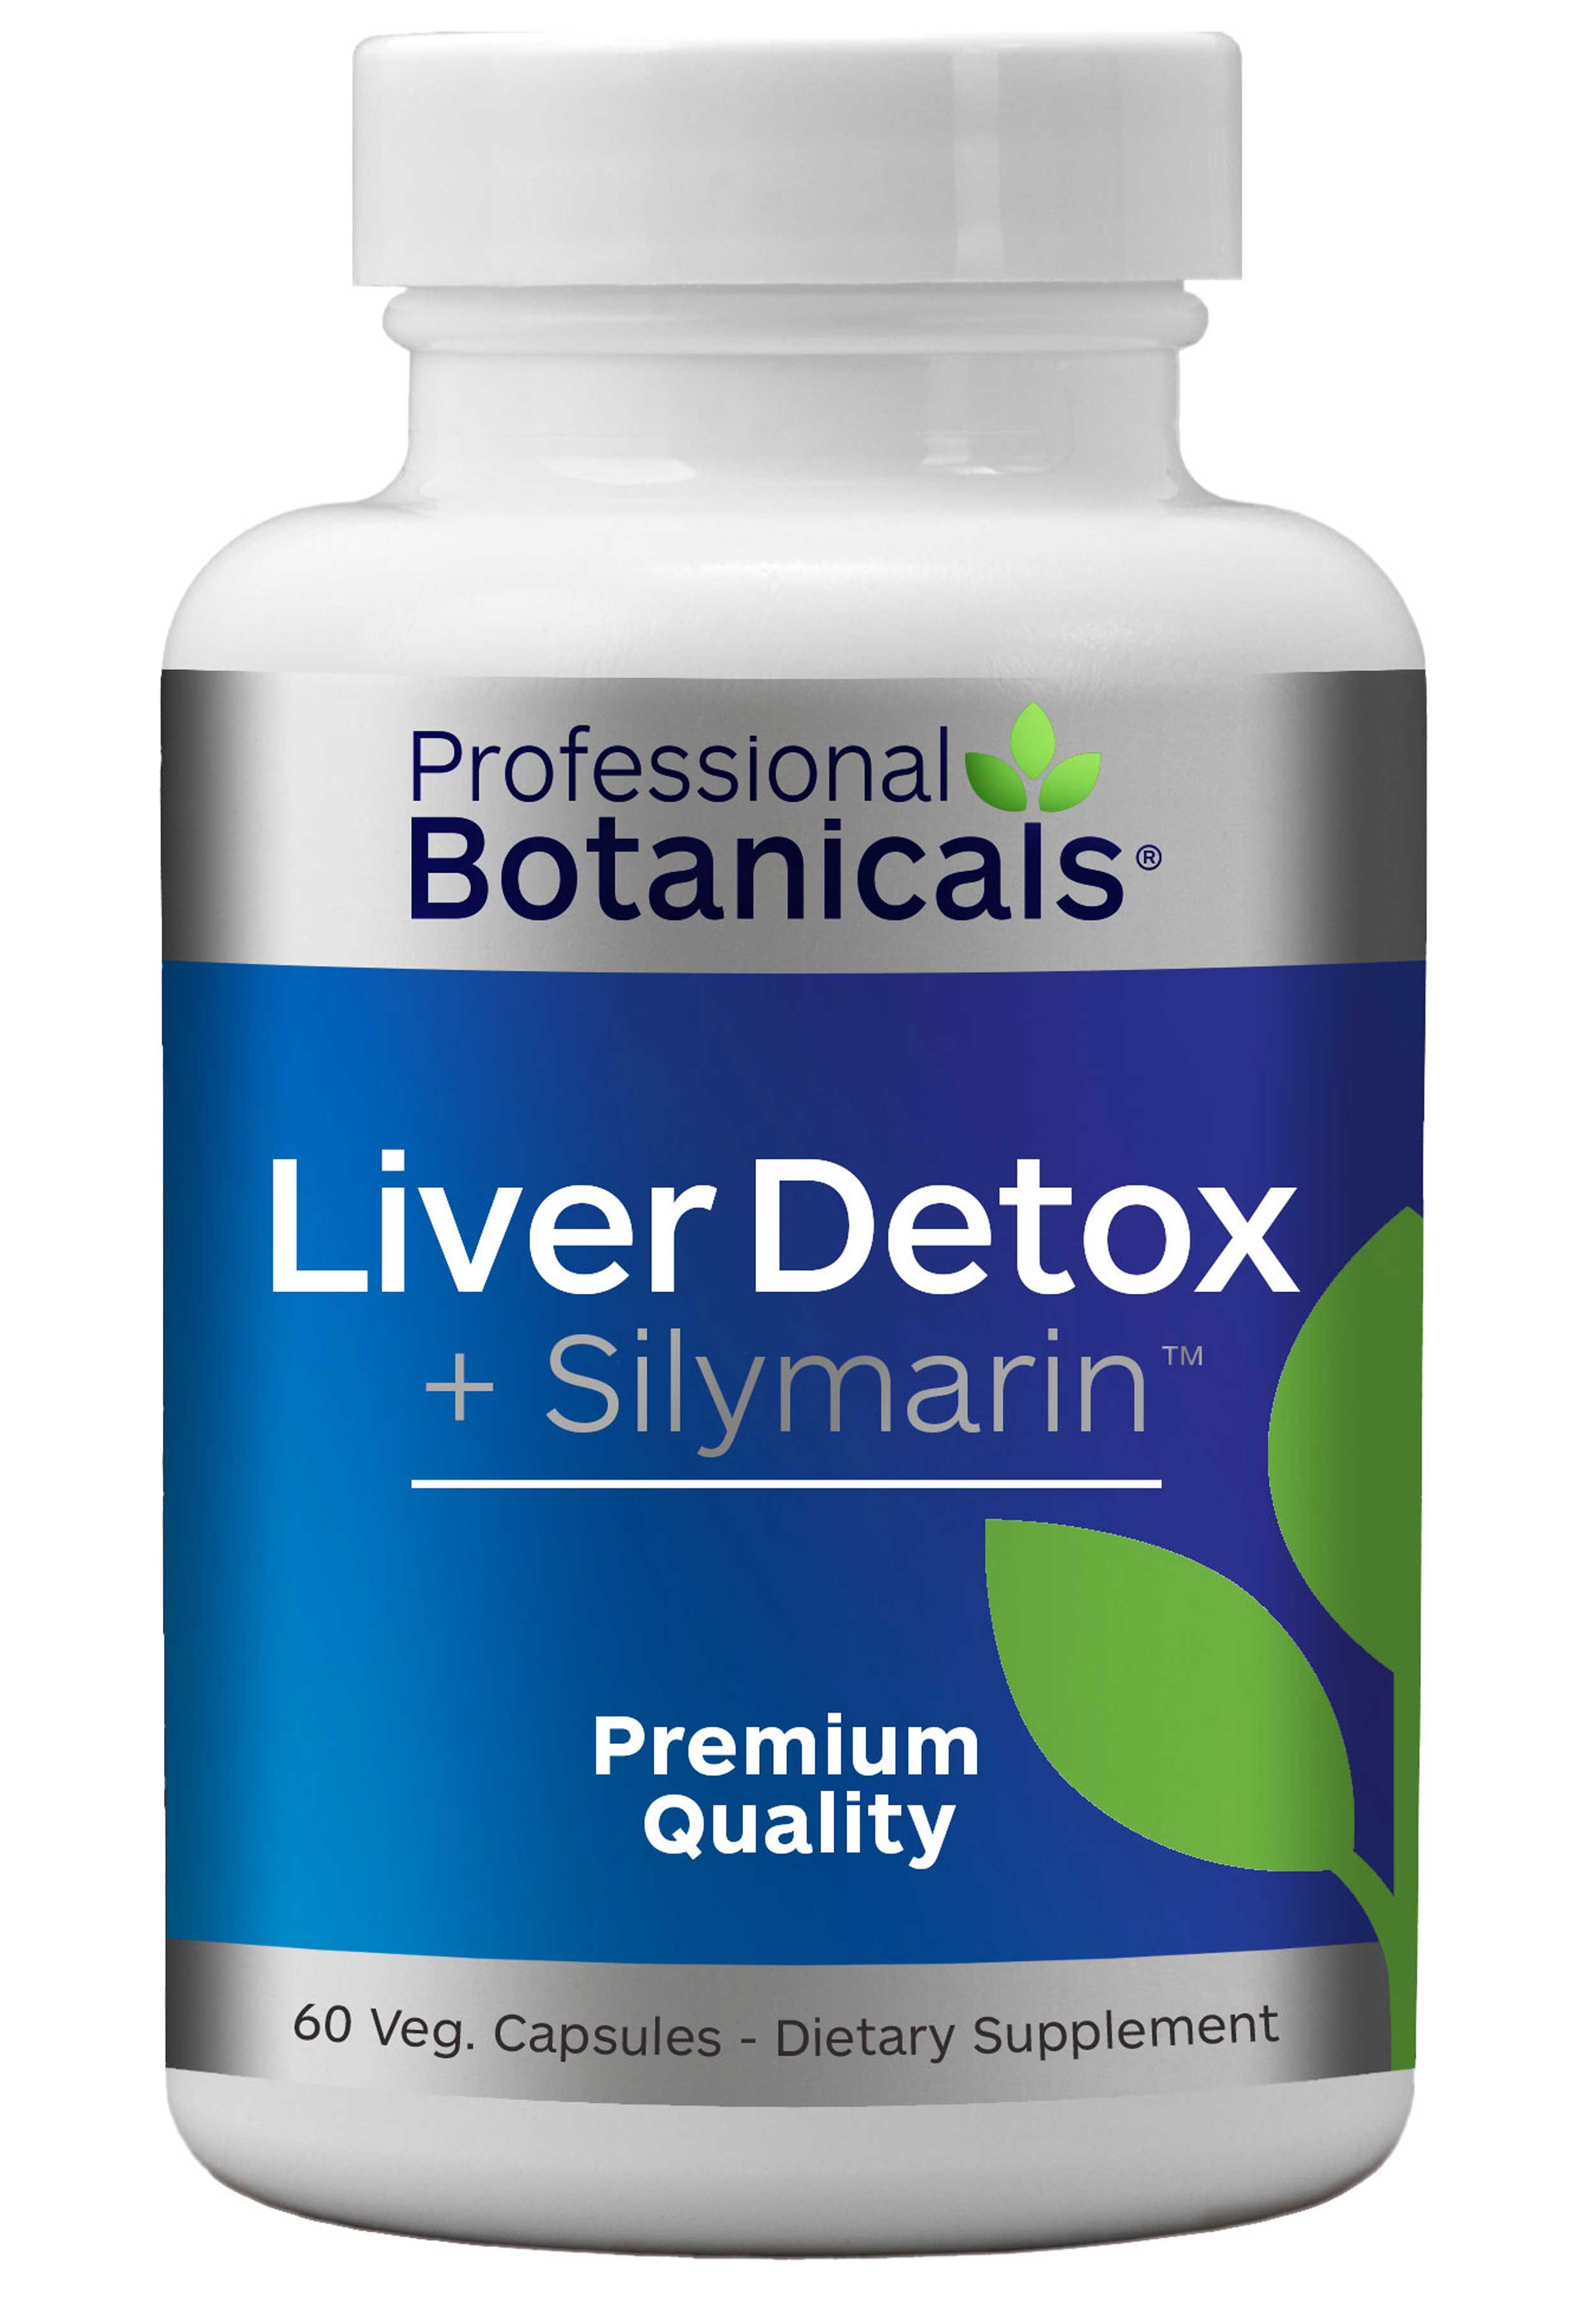 Professional Botanicals Liver Detox + Silymarin